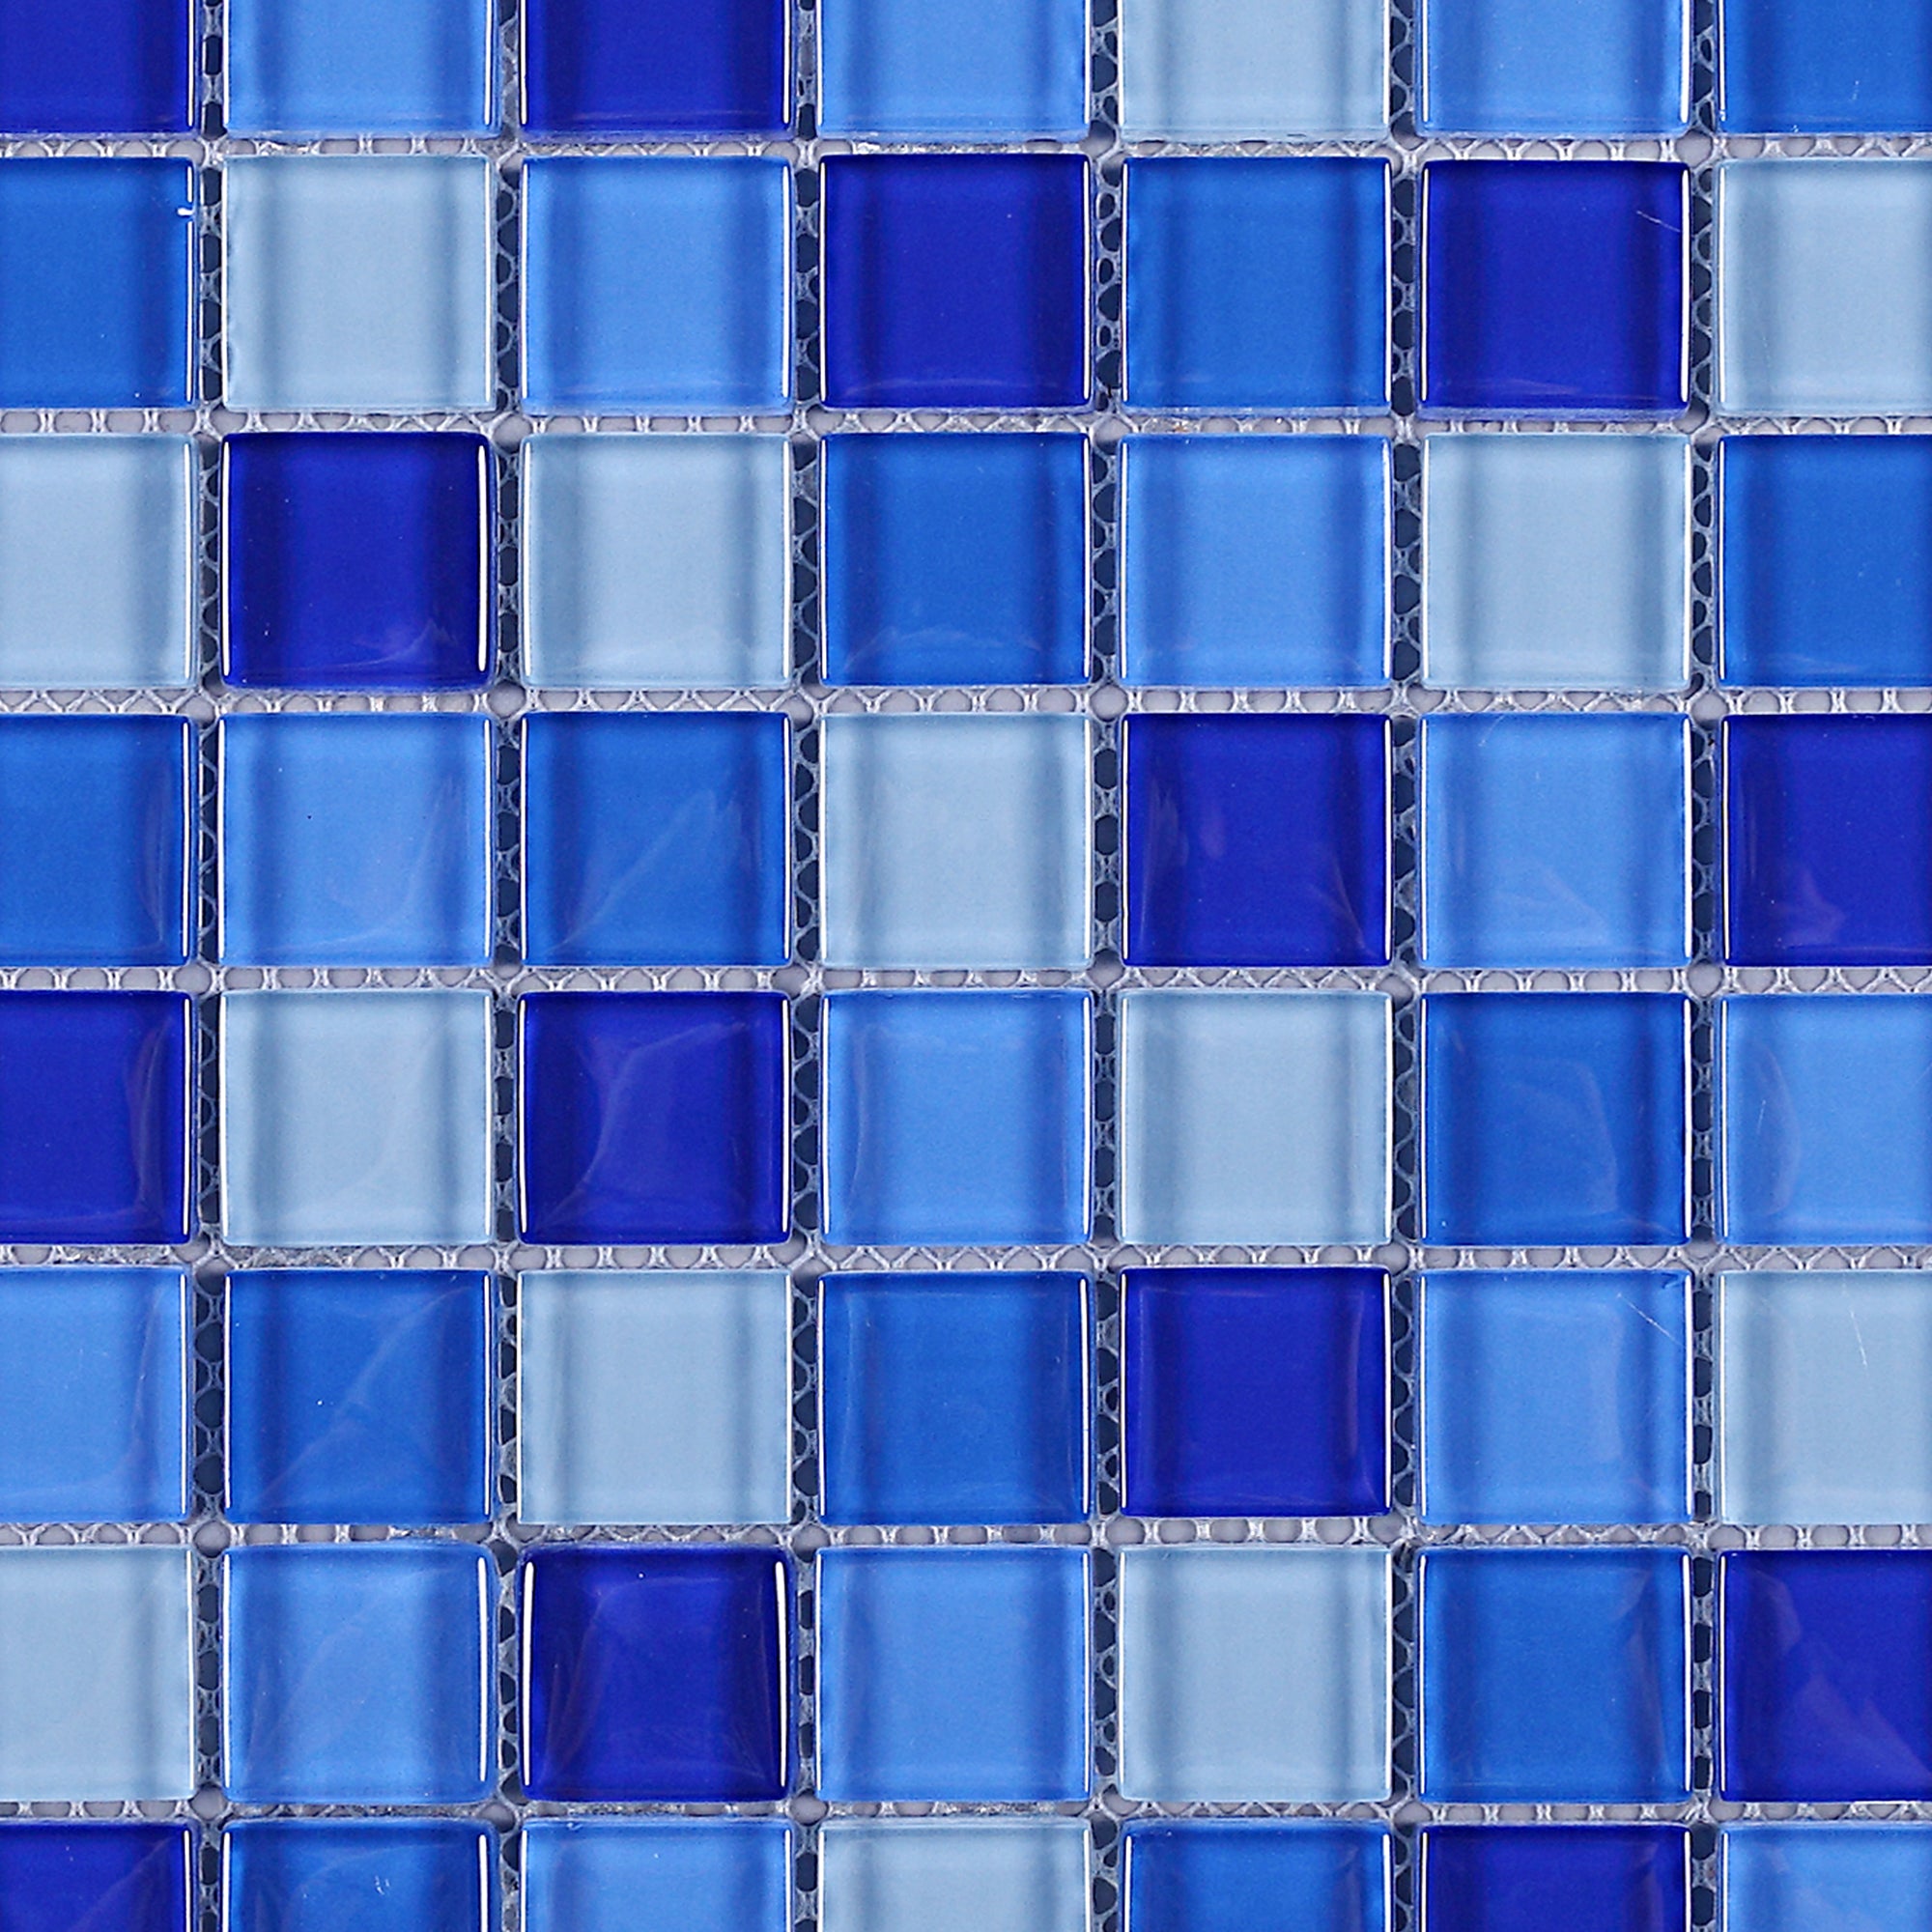 Tgemg 08 1x1 Square Blue Glass Mosaic Tile Sheet Tile Generation 5422